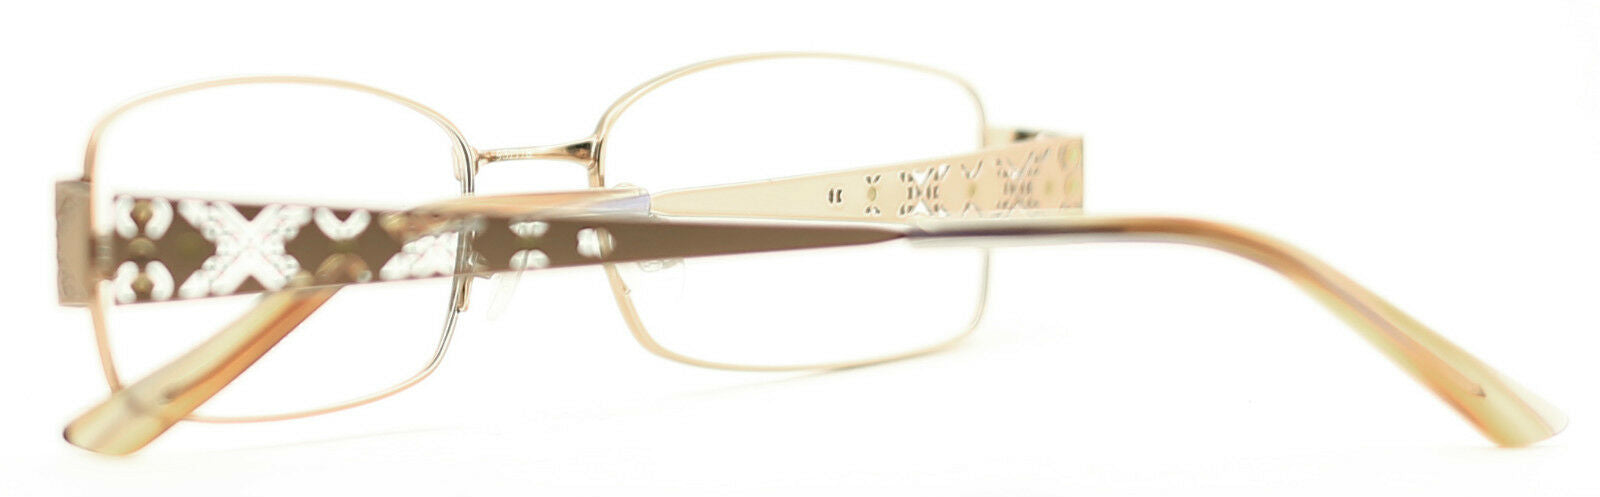 CHARMANT CH10824 OR Titanium Eyewear FRAMES RX Optical Eyeglasses Glasses - New